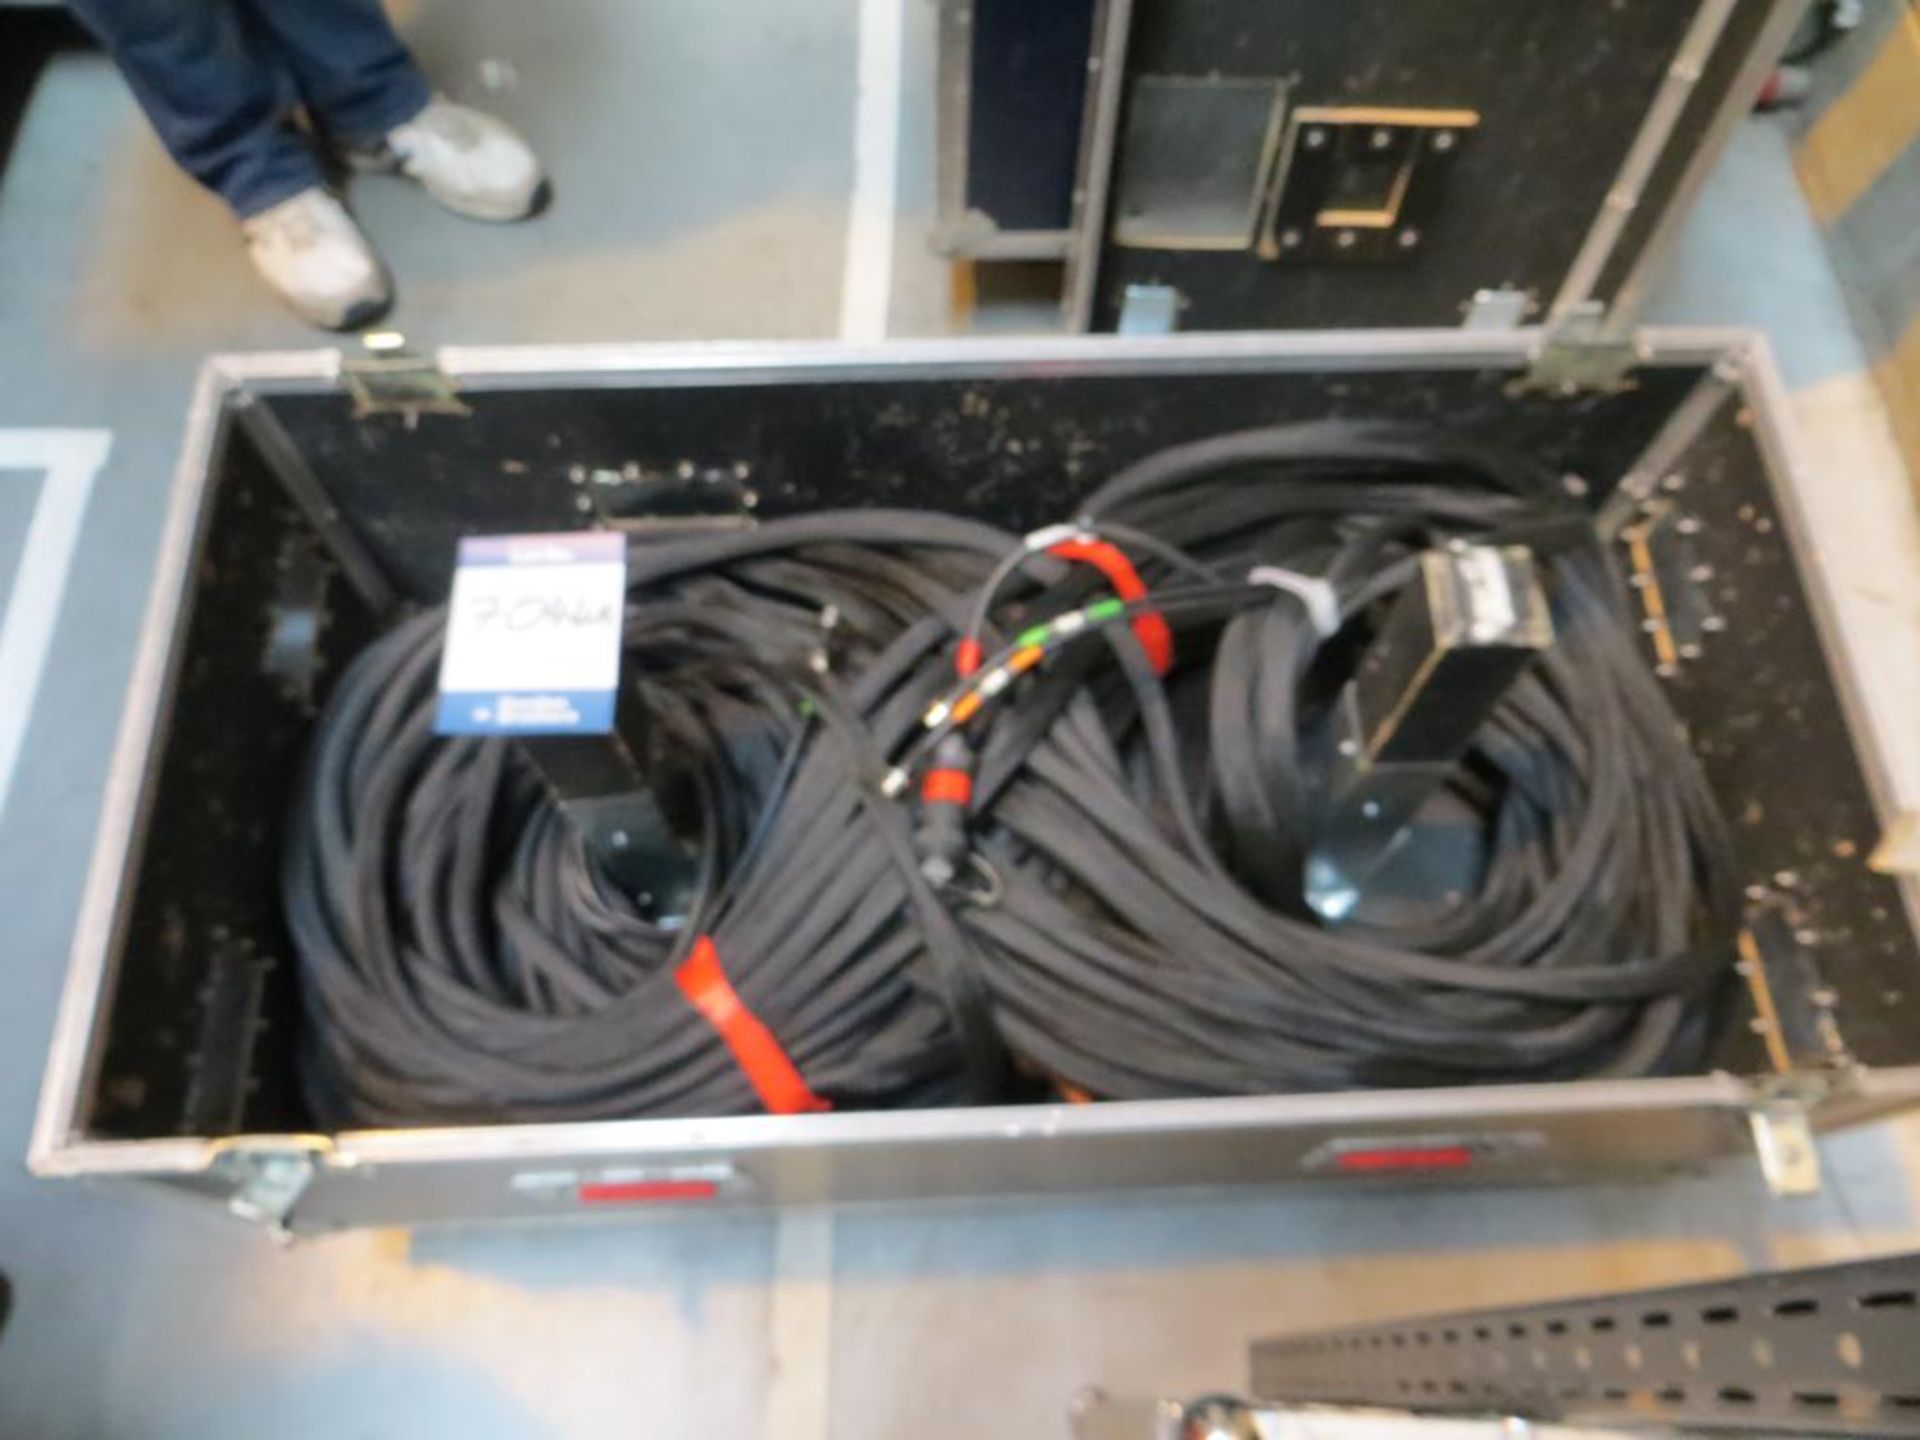 2x No. 100m Panasonic, Power/Sdi camera multi-core cables in transit case: Unit C Moorside, 40